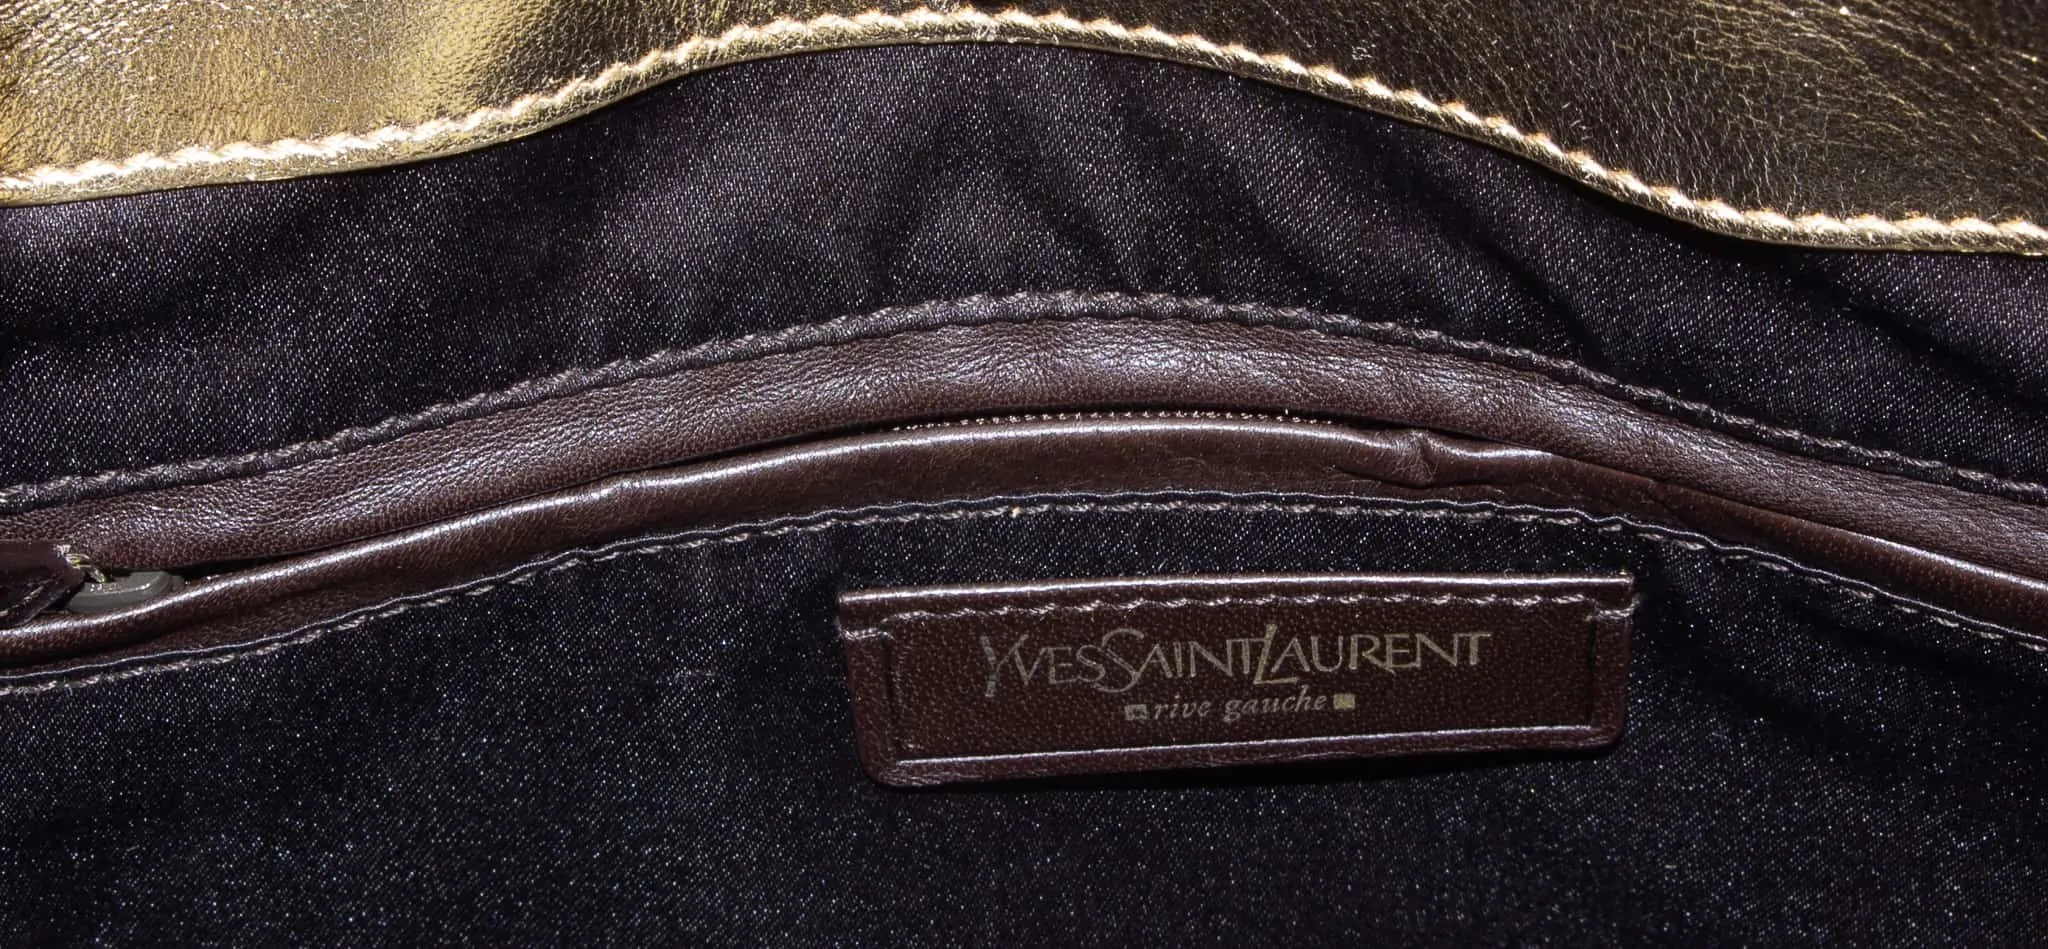 Yves Saint Laurent, Bags, Ysl Rive Gauche Leather Tote Black